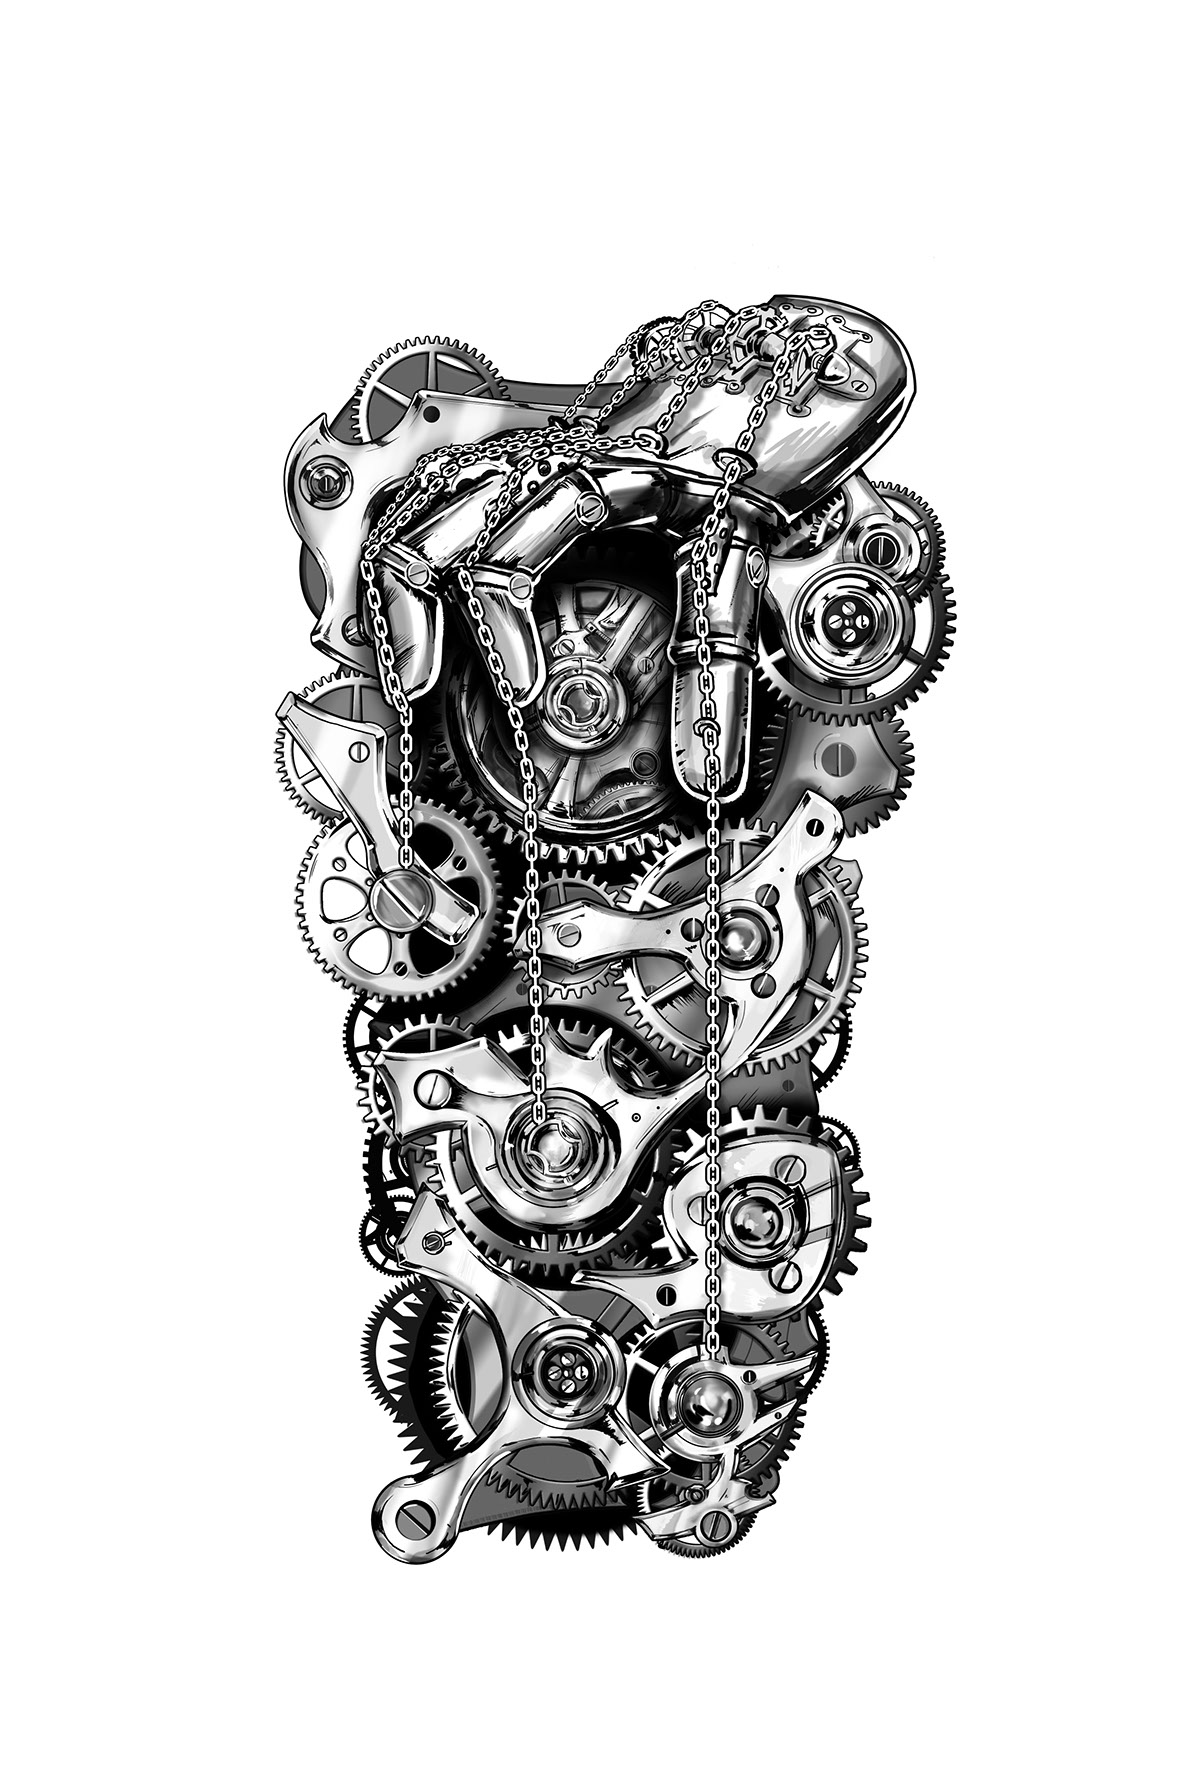 tattoo gears chains clockwork leonardo amaya ink hand pulling strings concept inked